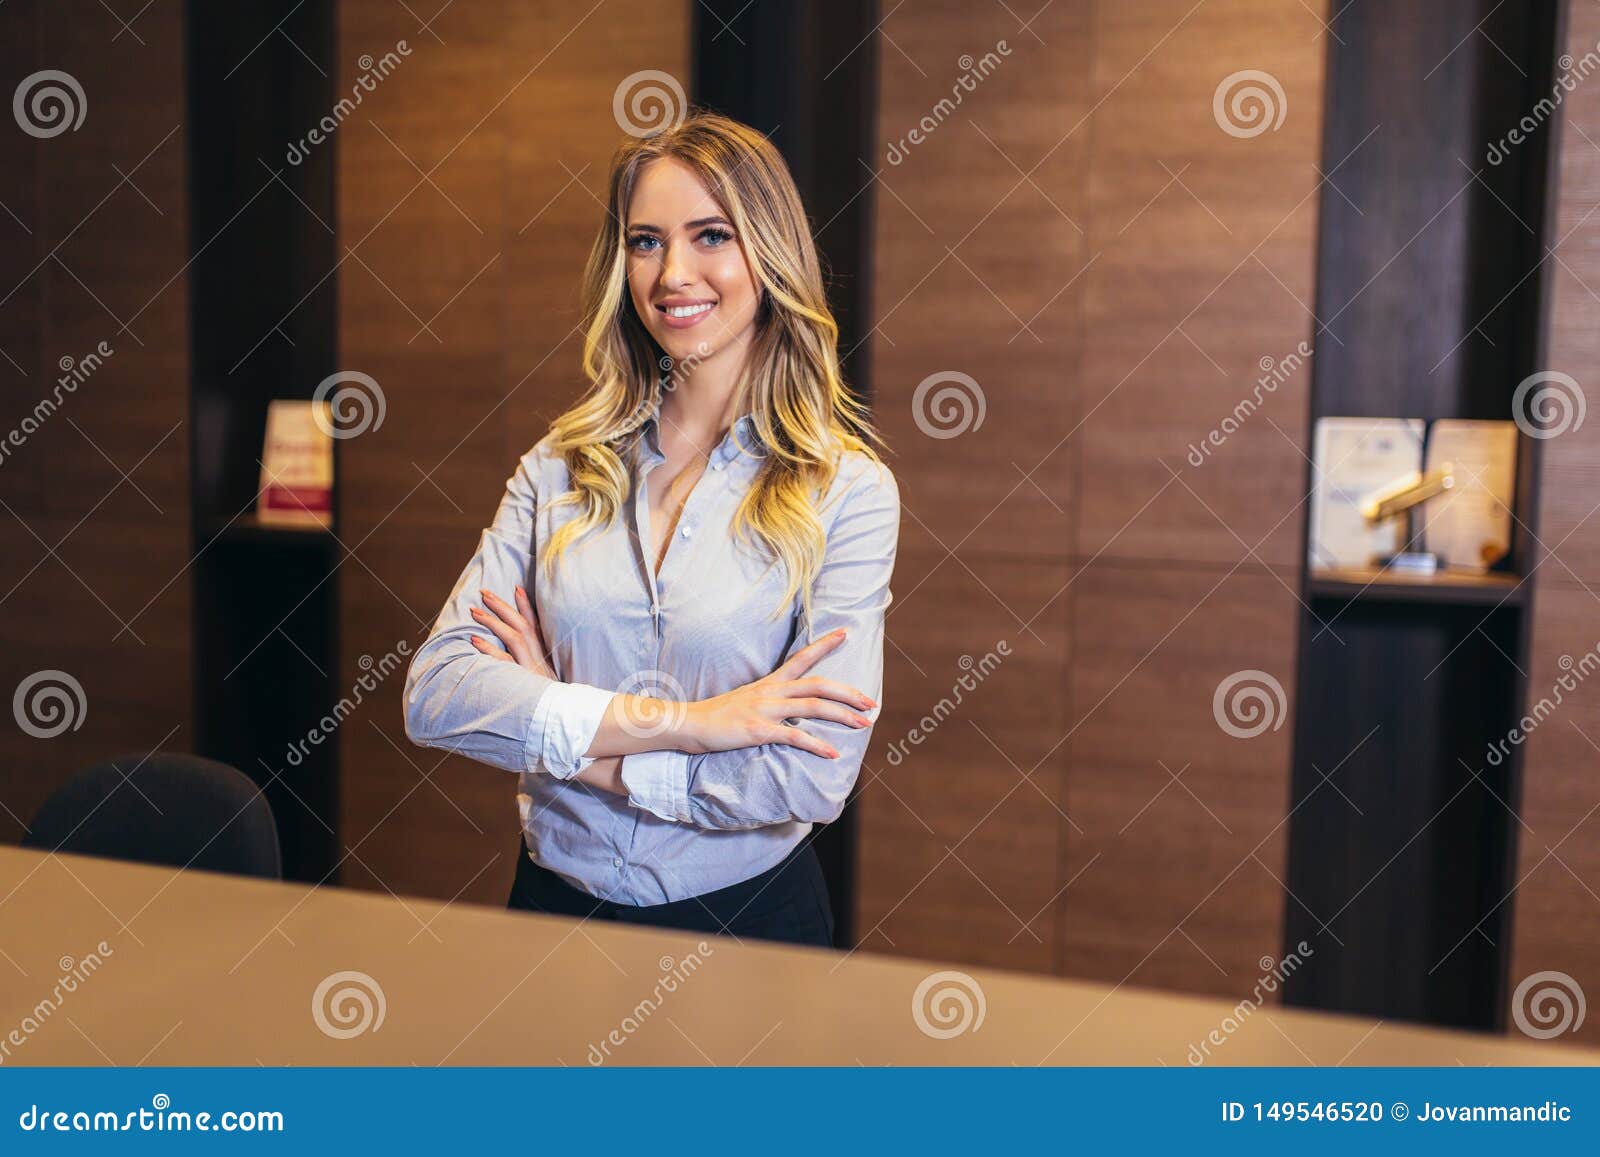 pretty receptionist at work